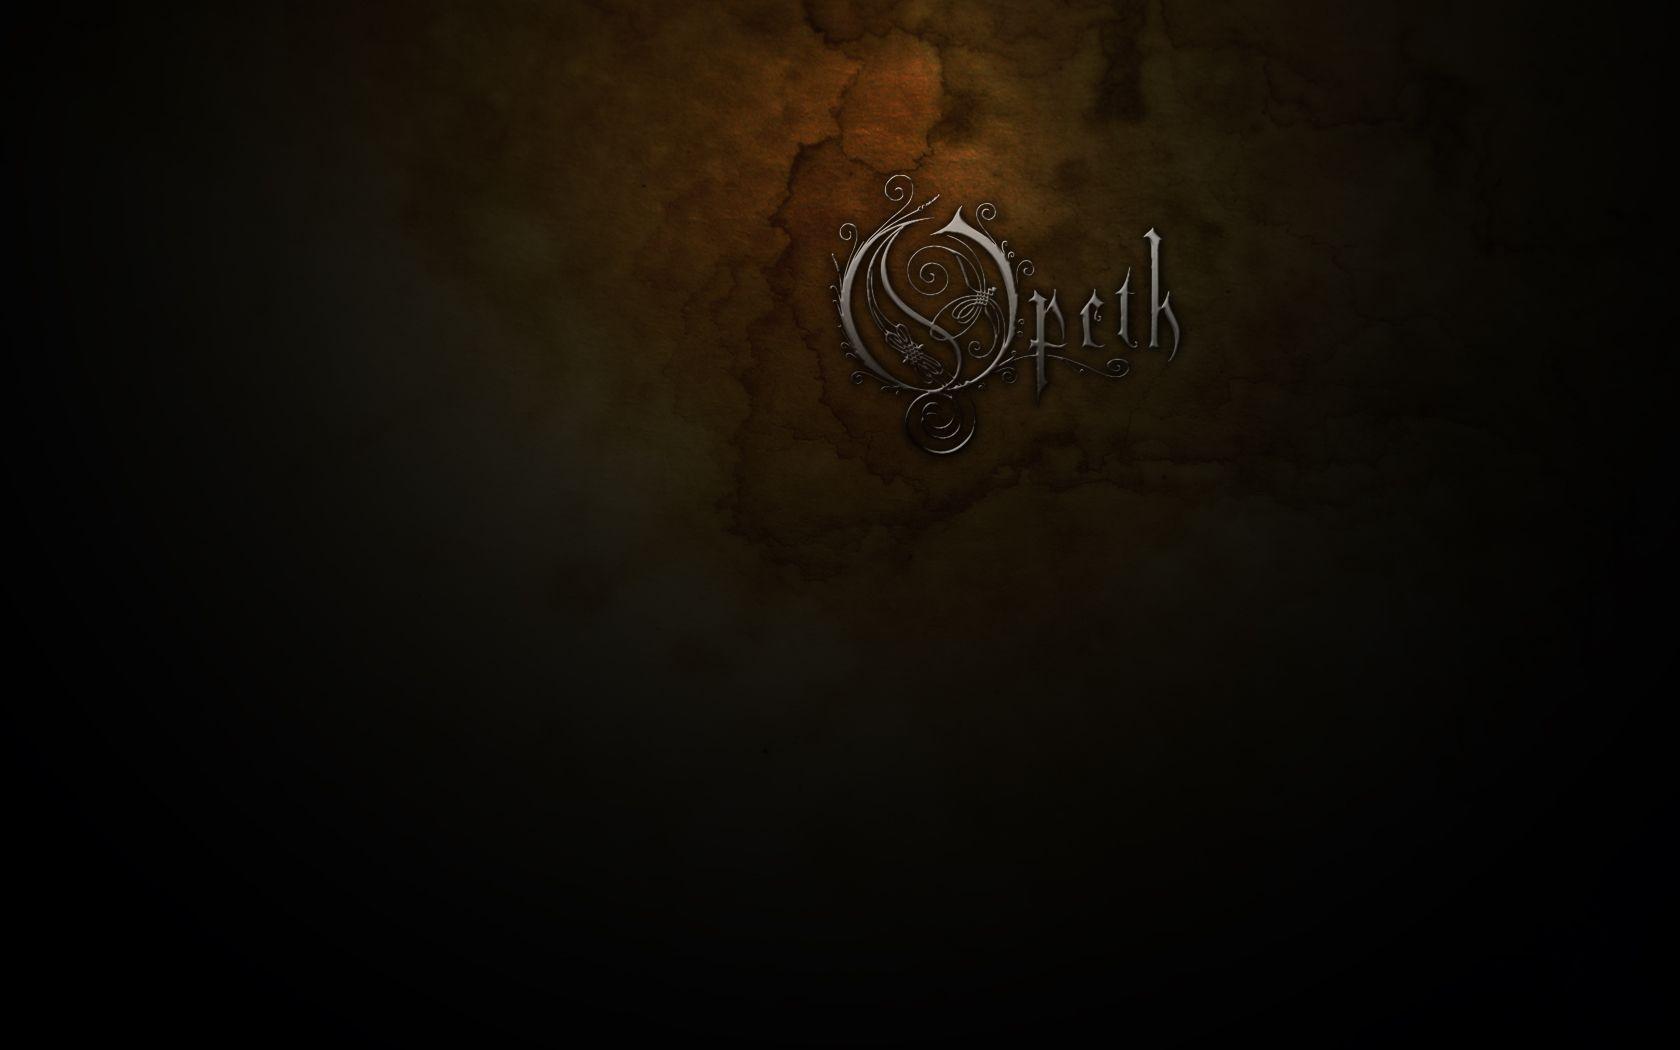 More Like Opeth Wallpaper